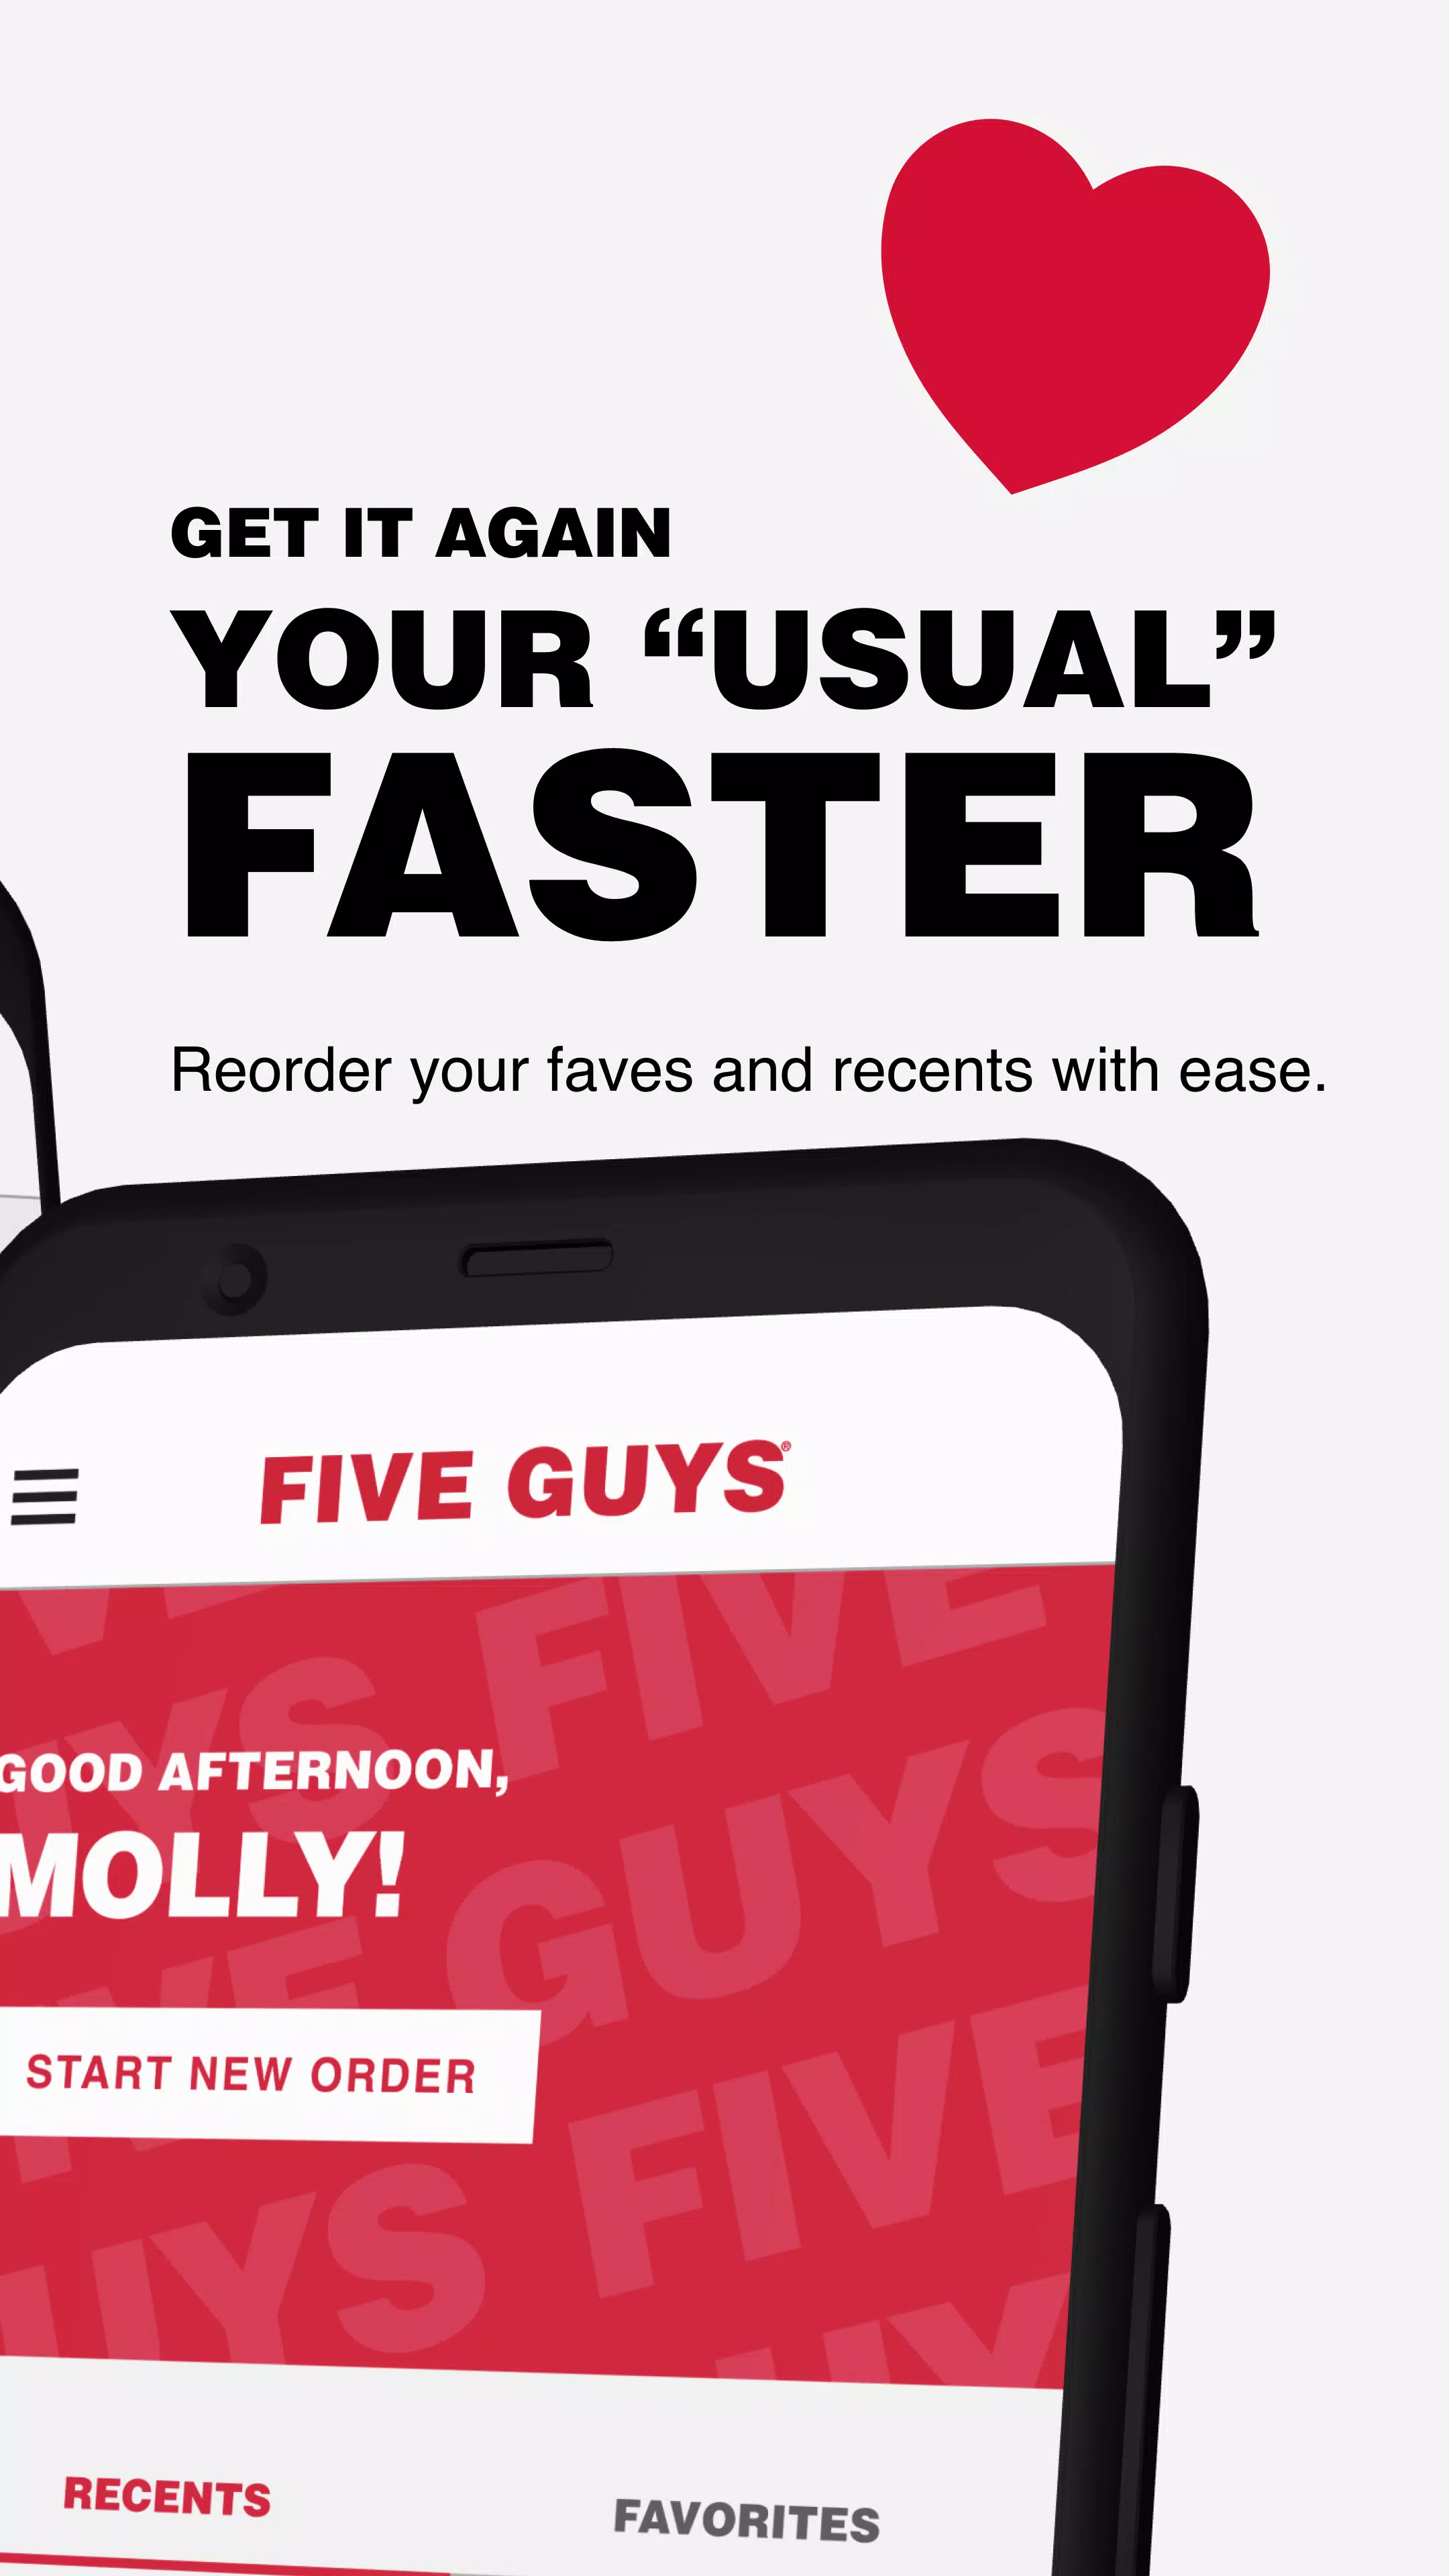 Five Guys Mobile App